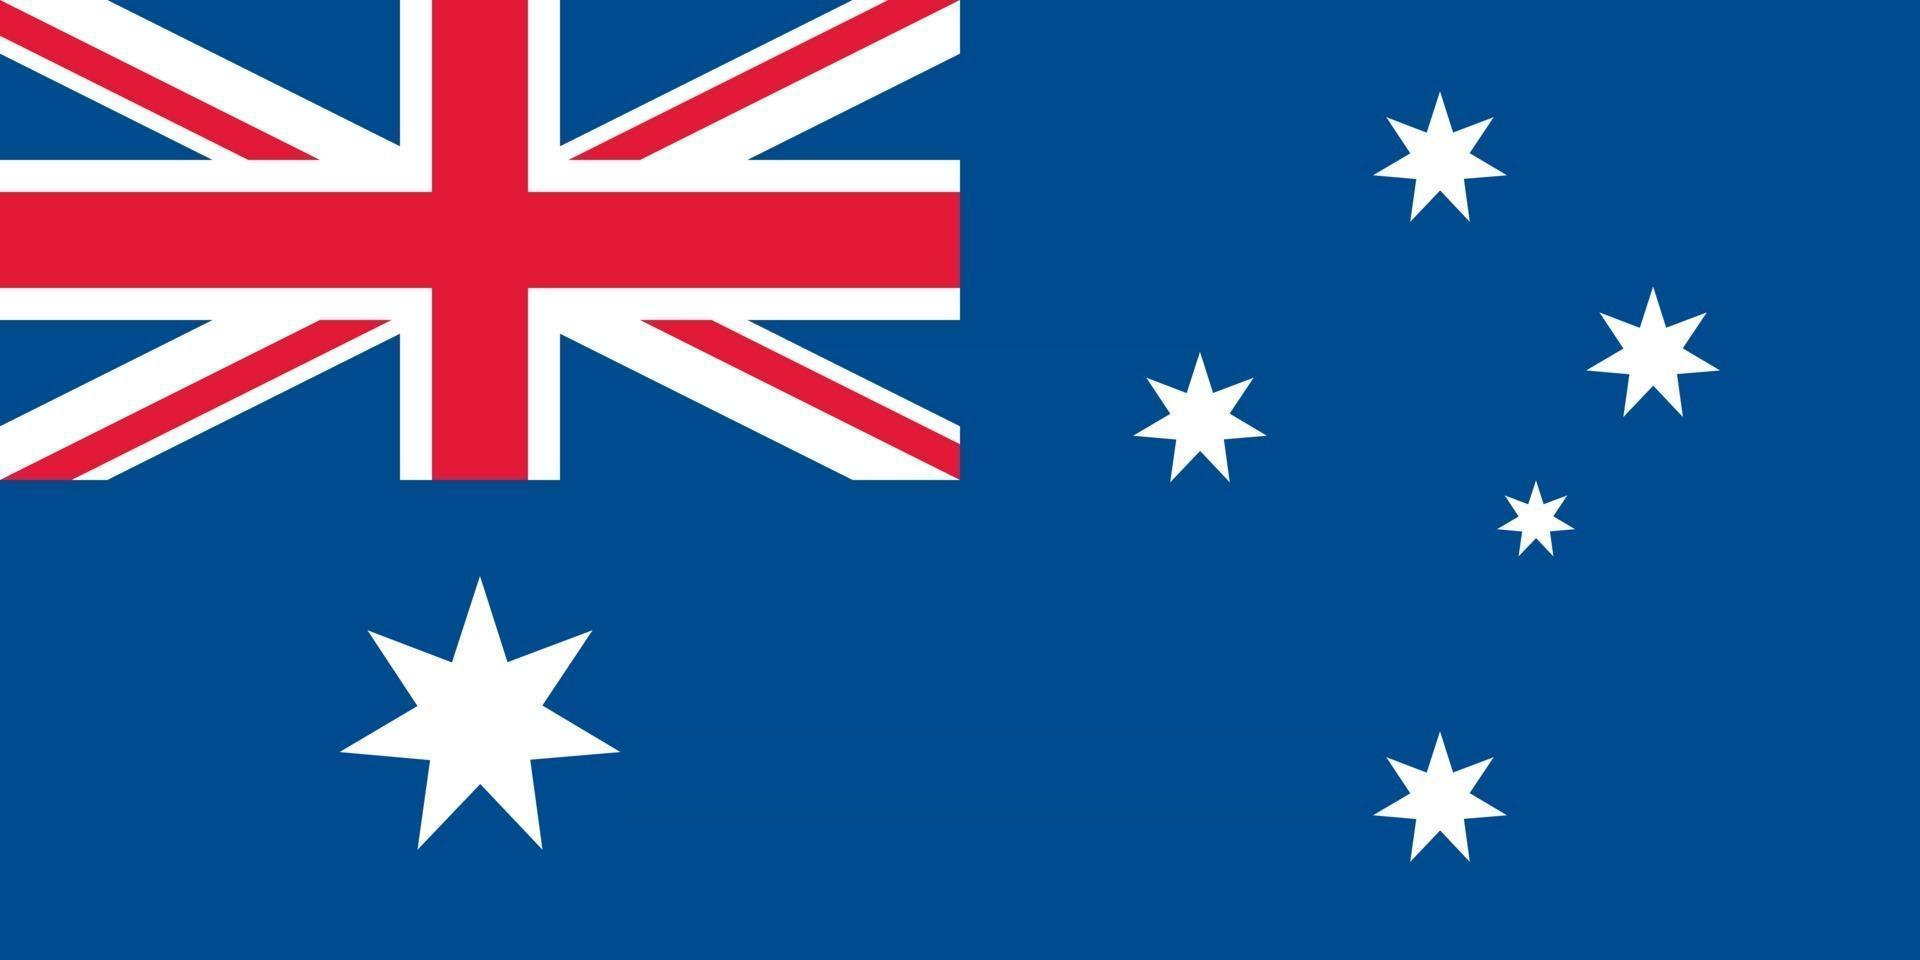 Australia officially flag vector